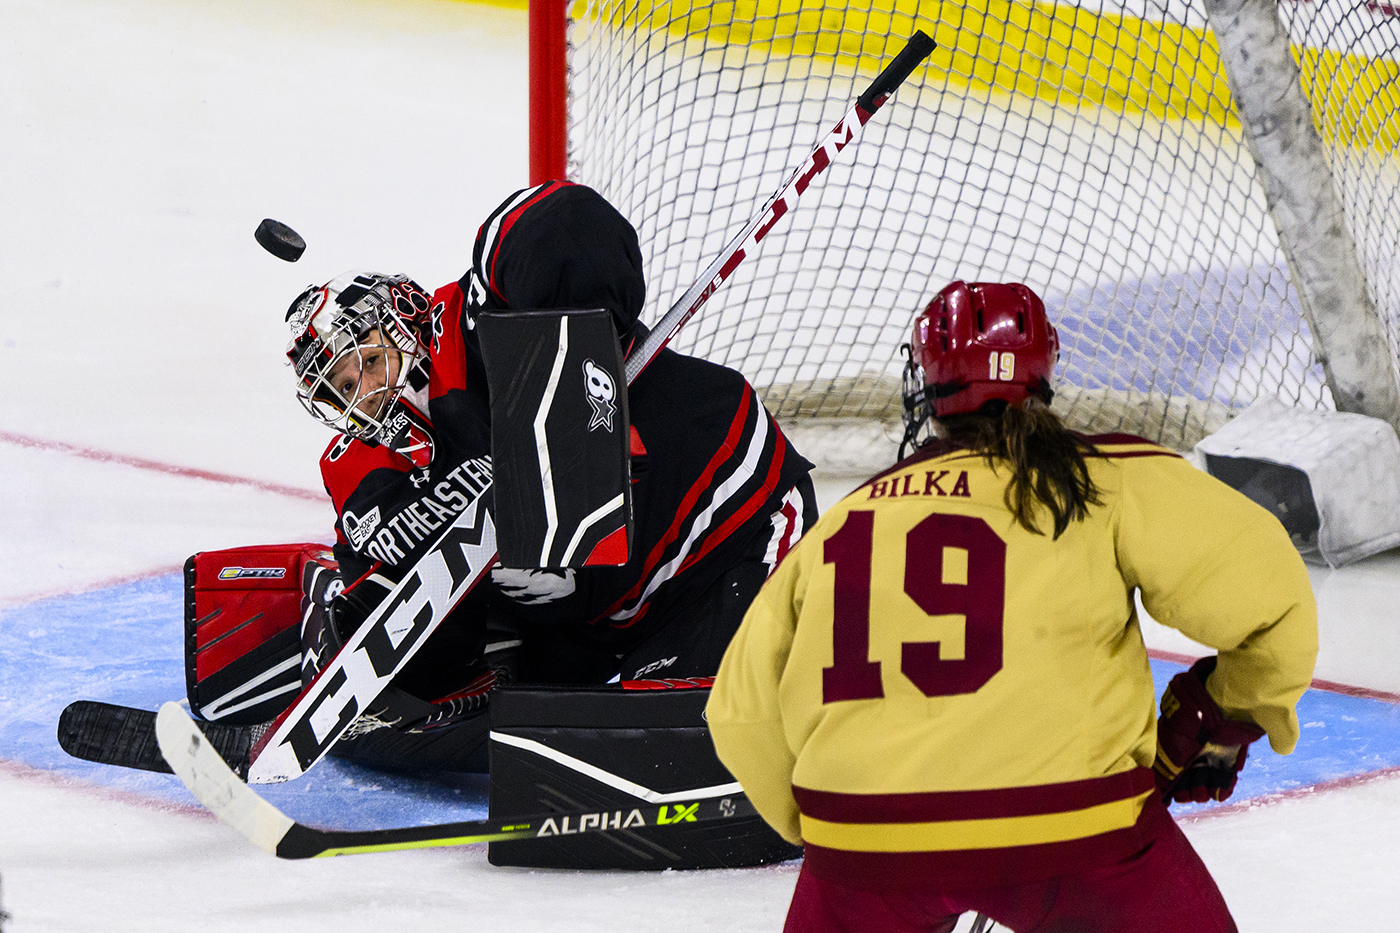 Northeastern womens hockey goalie saves shot made by Boston College player